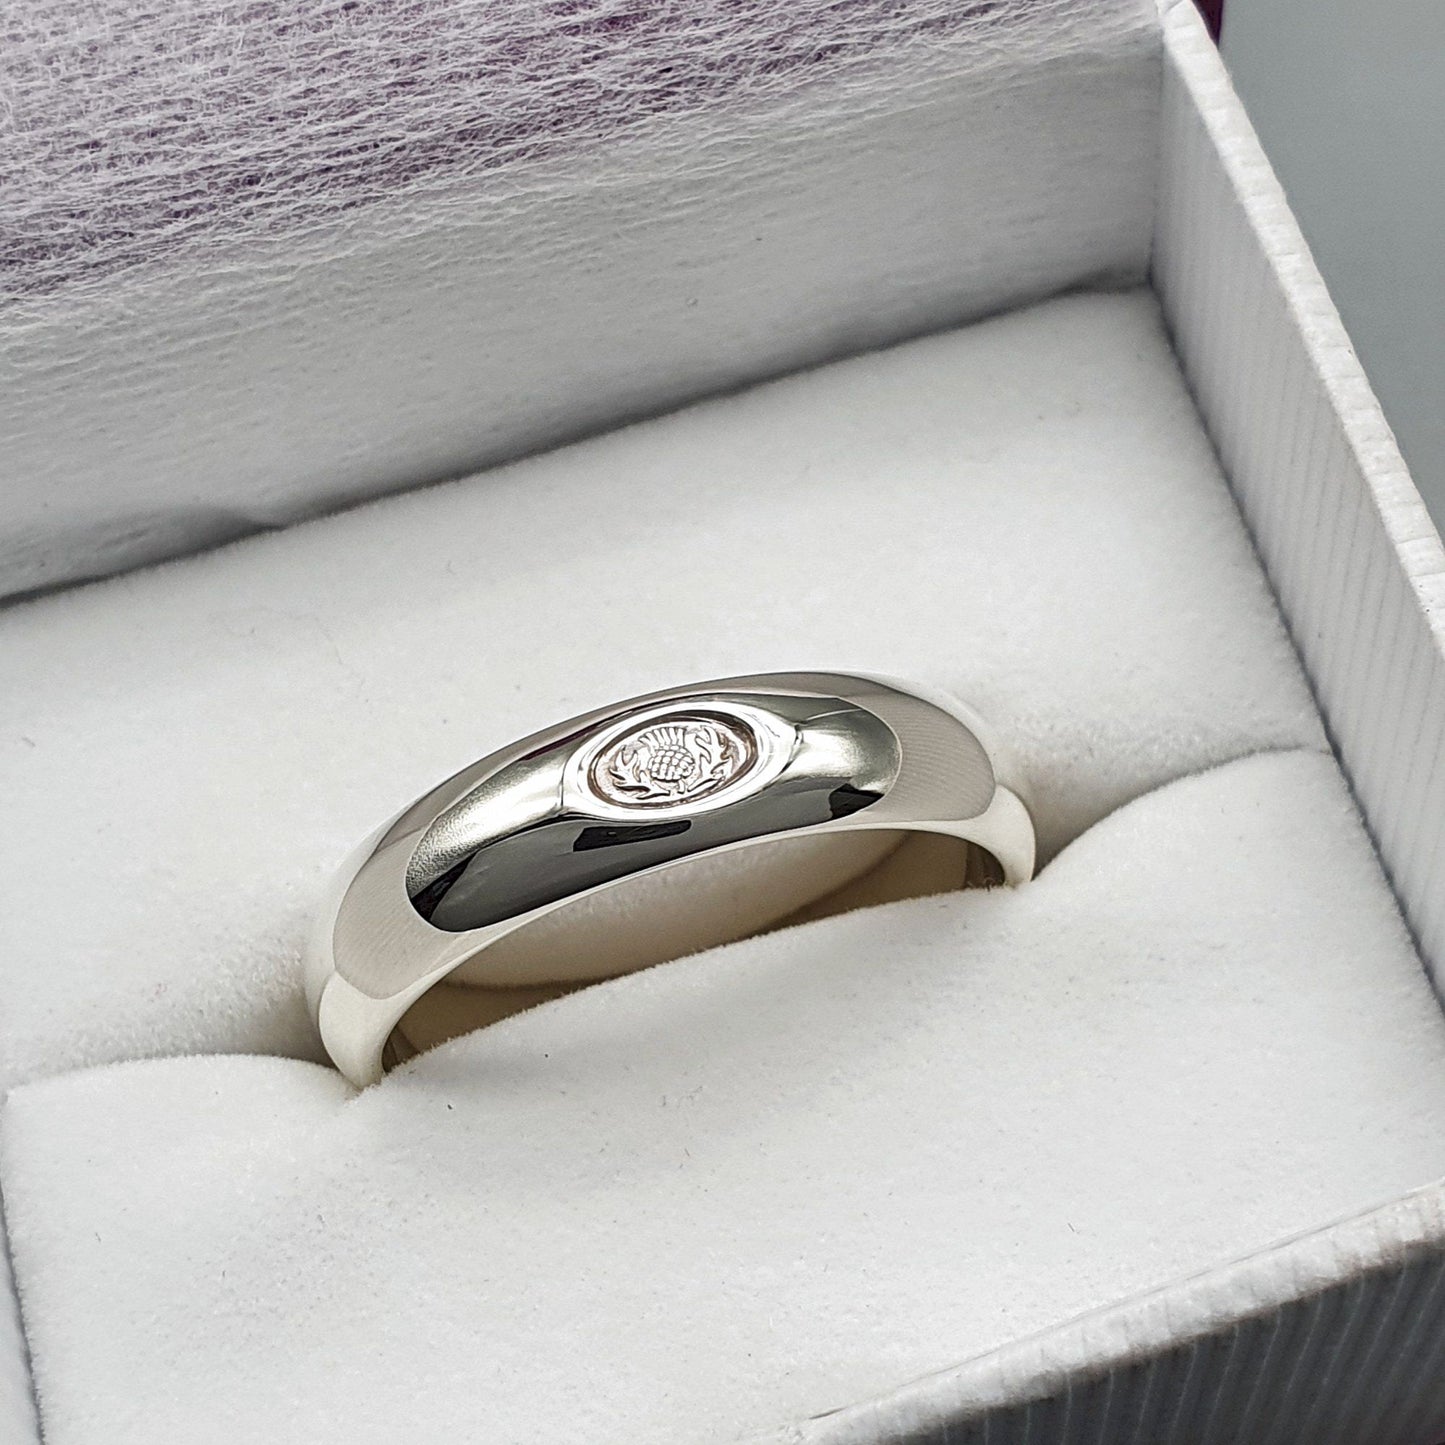 Silver wedding ring 5mm to 6mm Scottish Thistle medium court band. - Gretna Green Wedding Rings